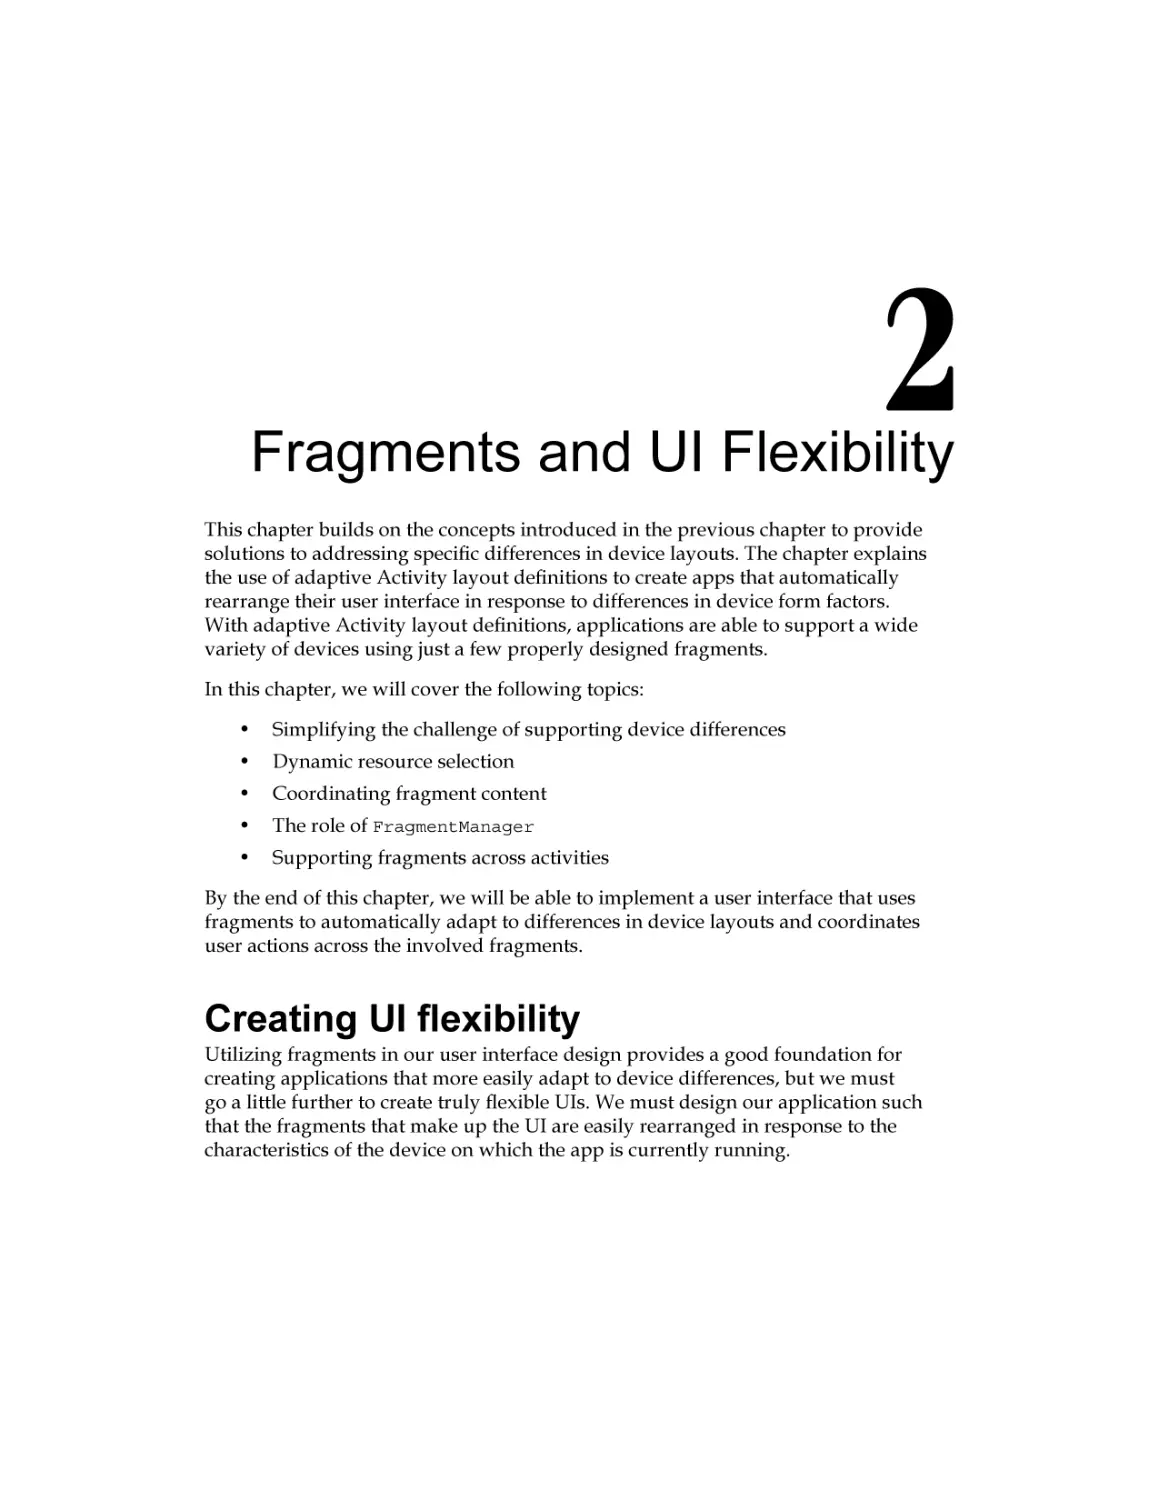 Chapter 2
Creating UI flexibility